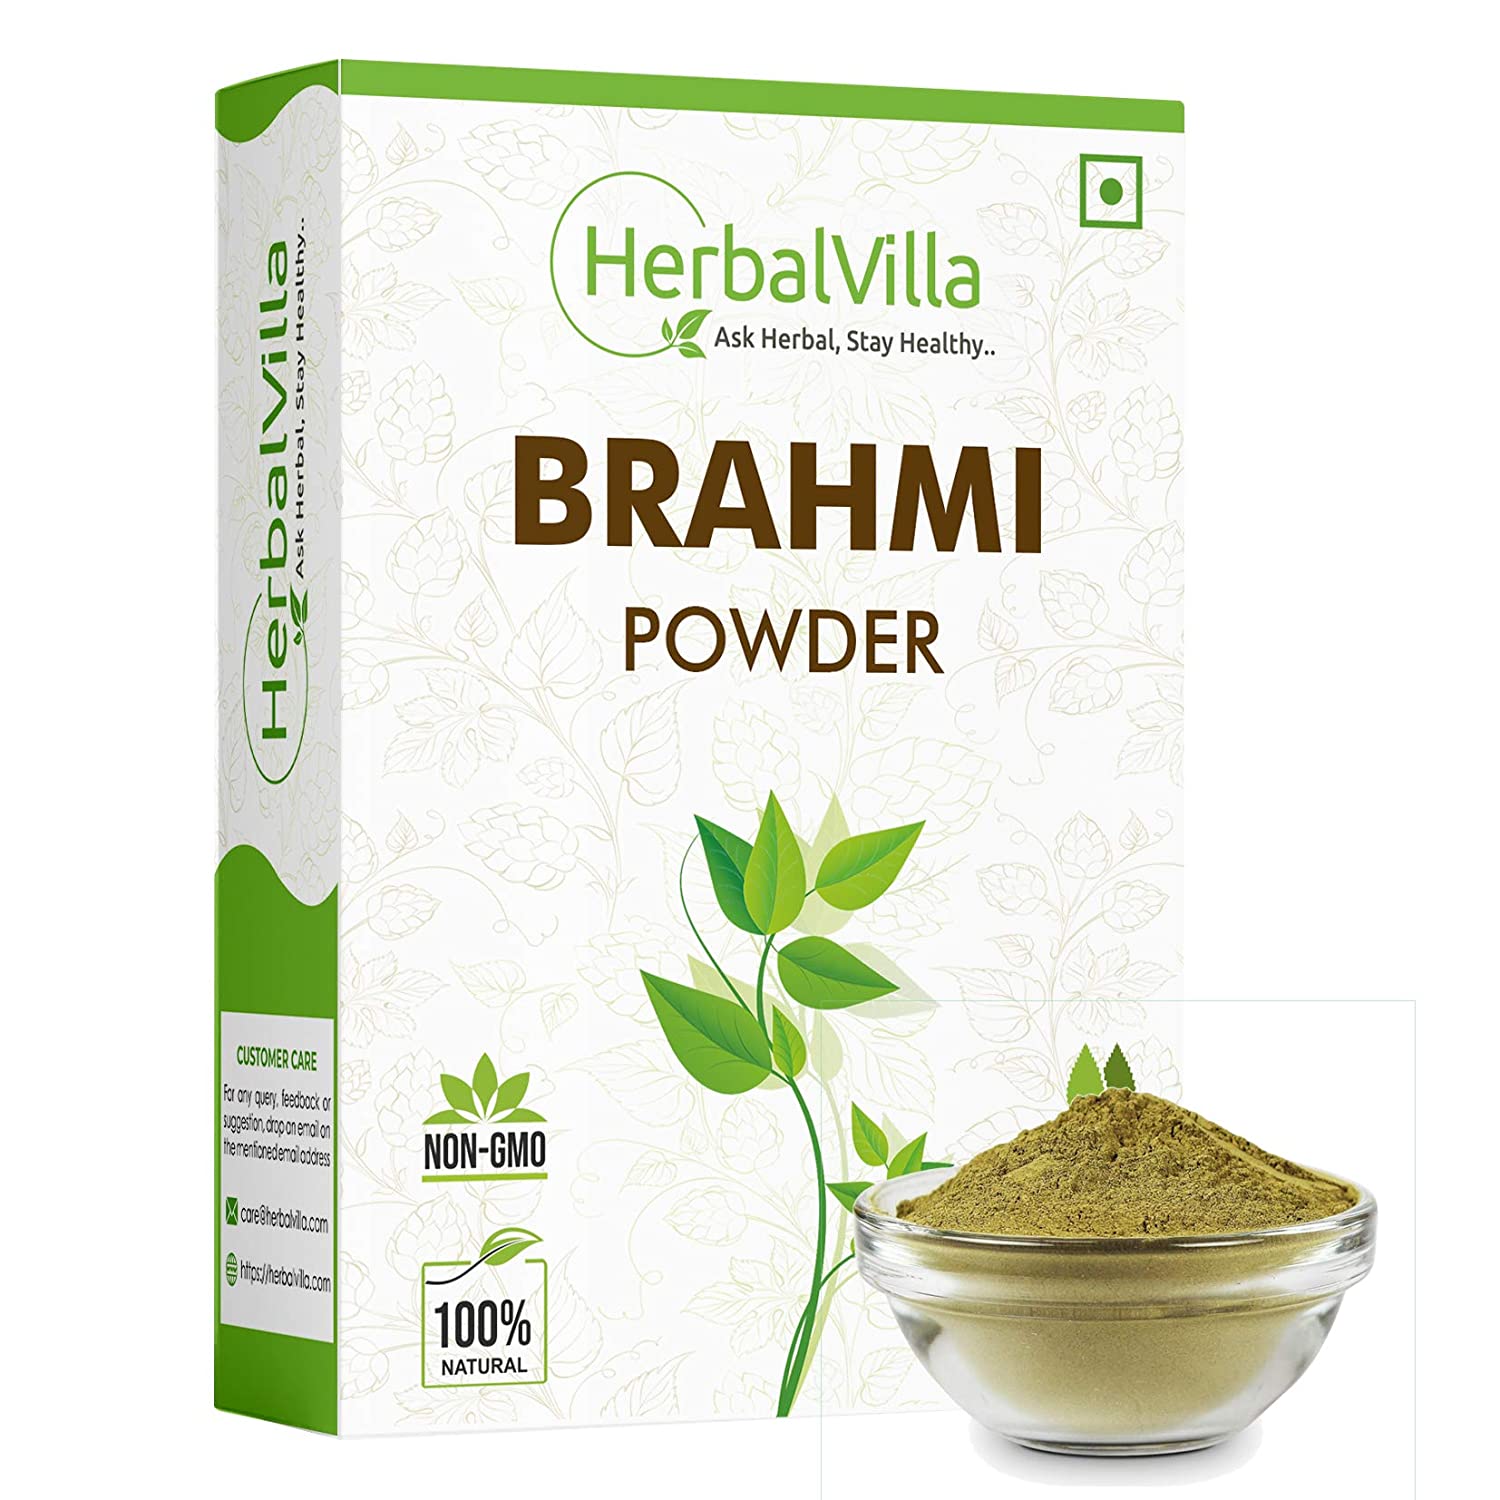 Herbvilla Brahmi Powder for Eating and hair growth - Herbvilla